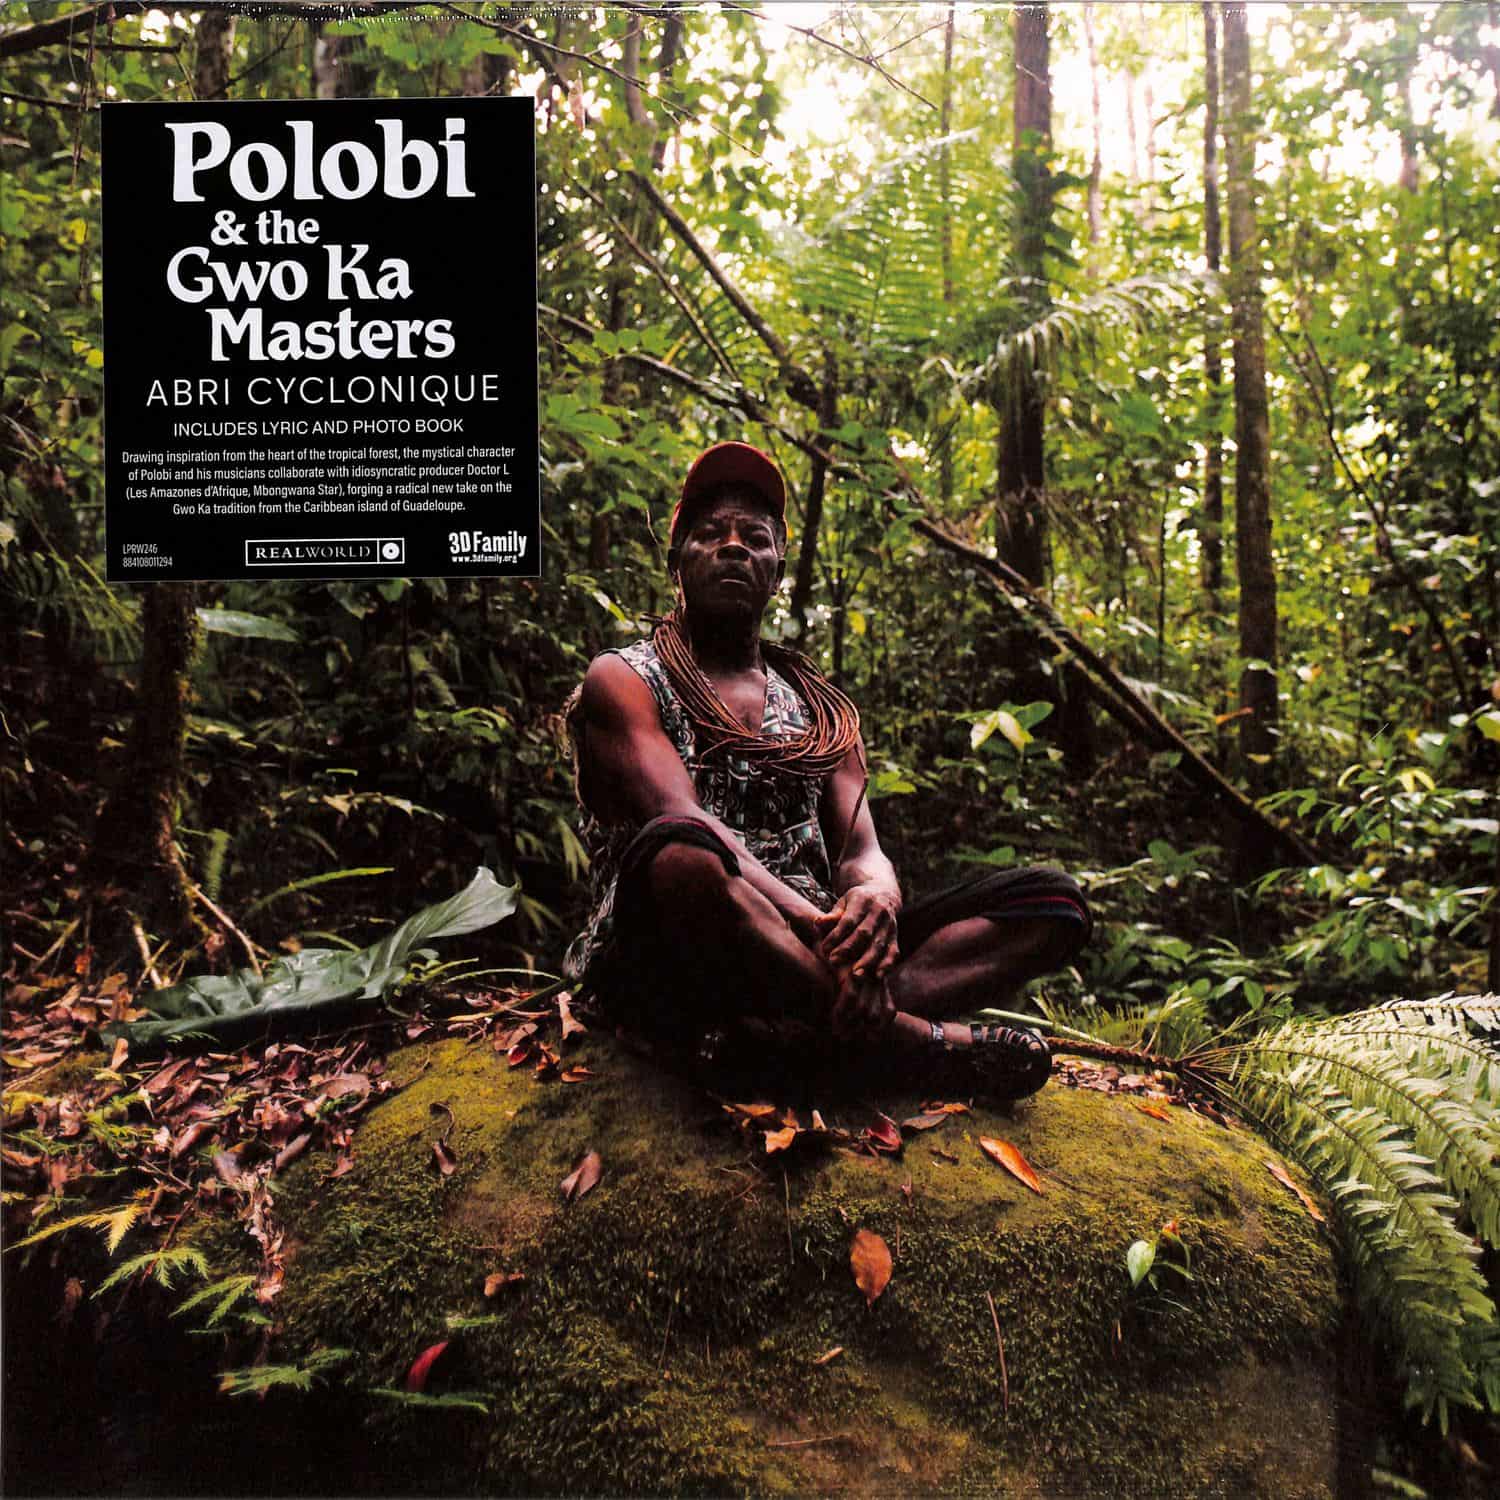 Polobi & The Gwo Ka Masters - ABRI CYCLONIQUE 